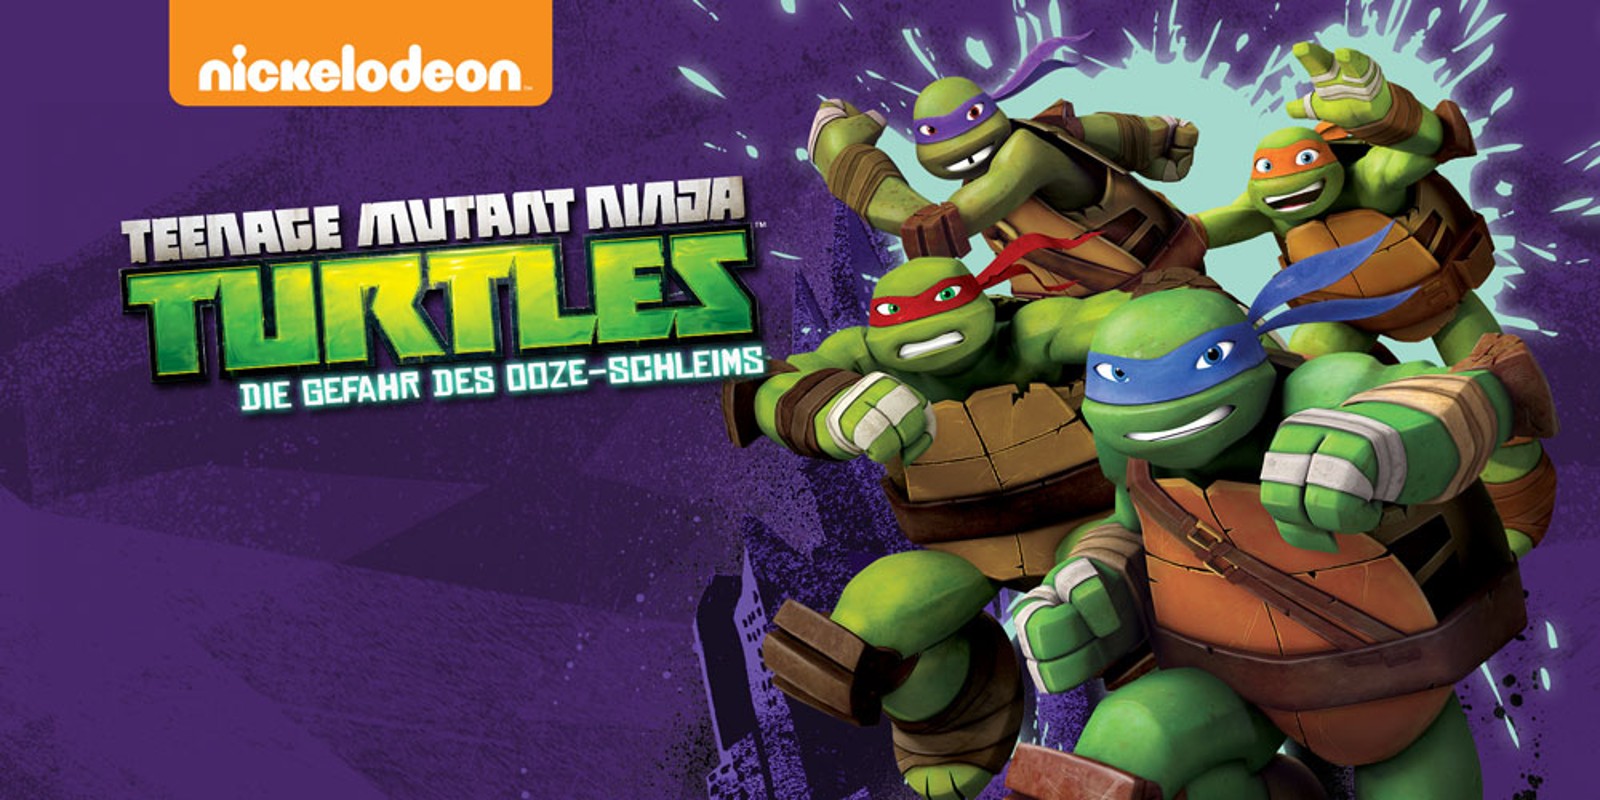 Teenage Mutant Ninja Turtles: Die Gefahr des Ooze-Schleims